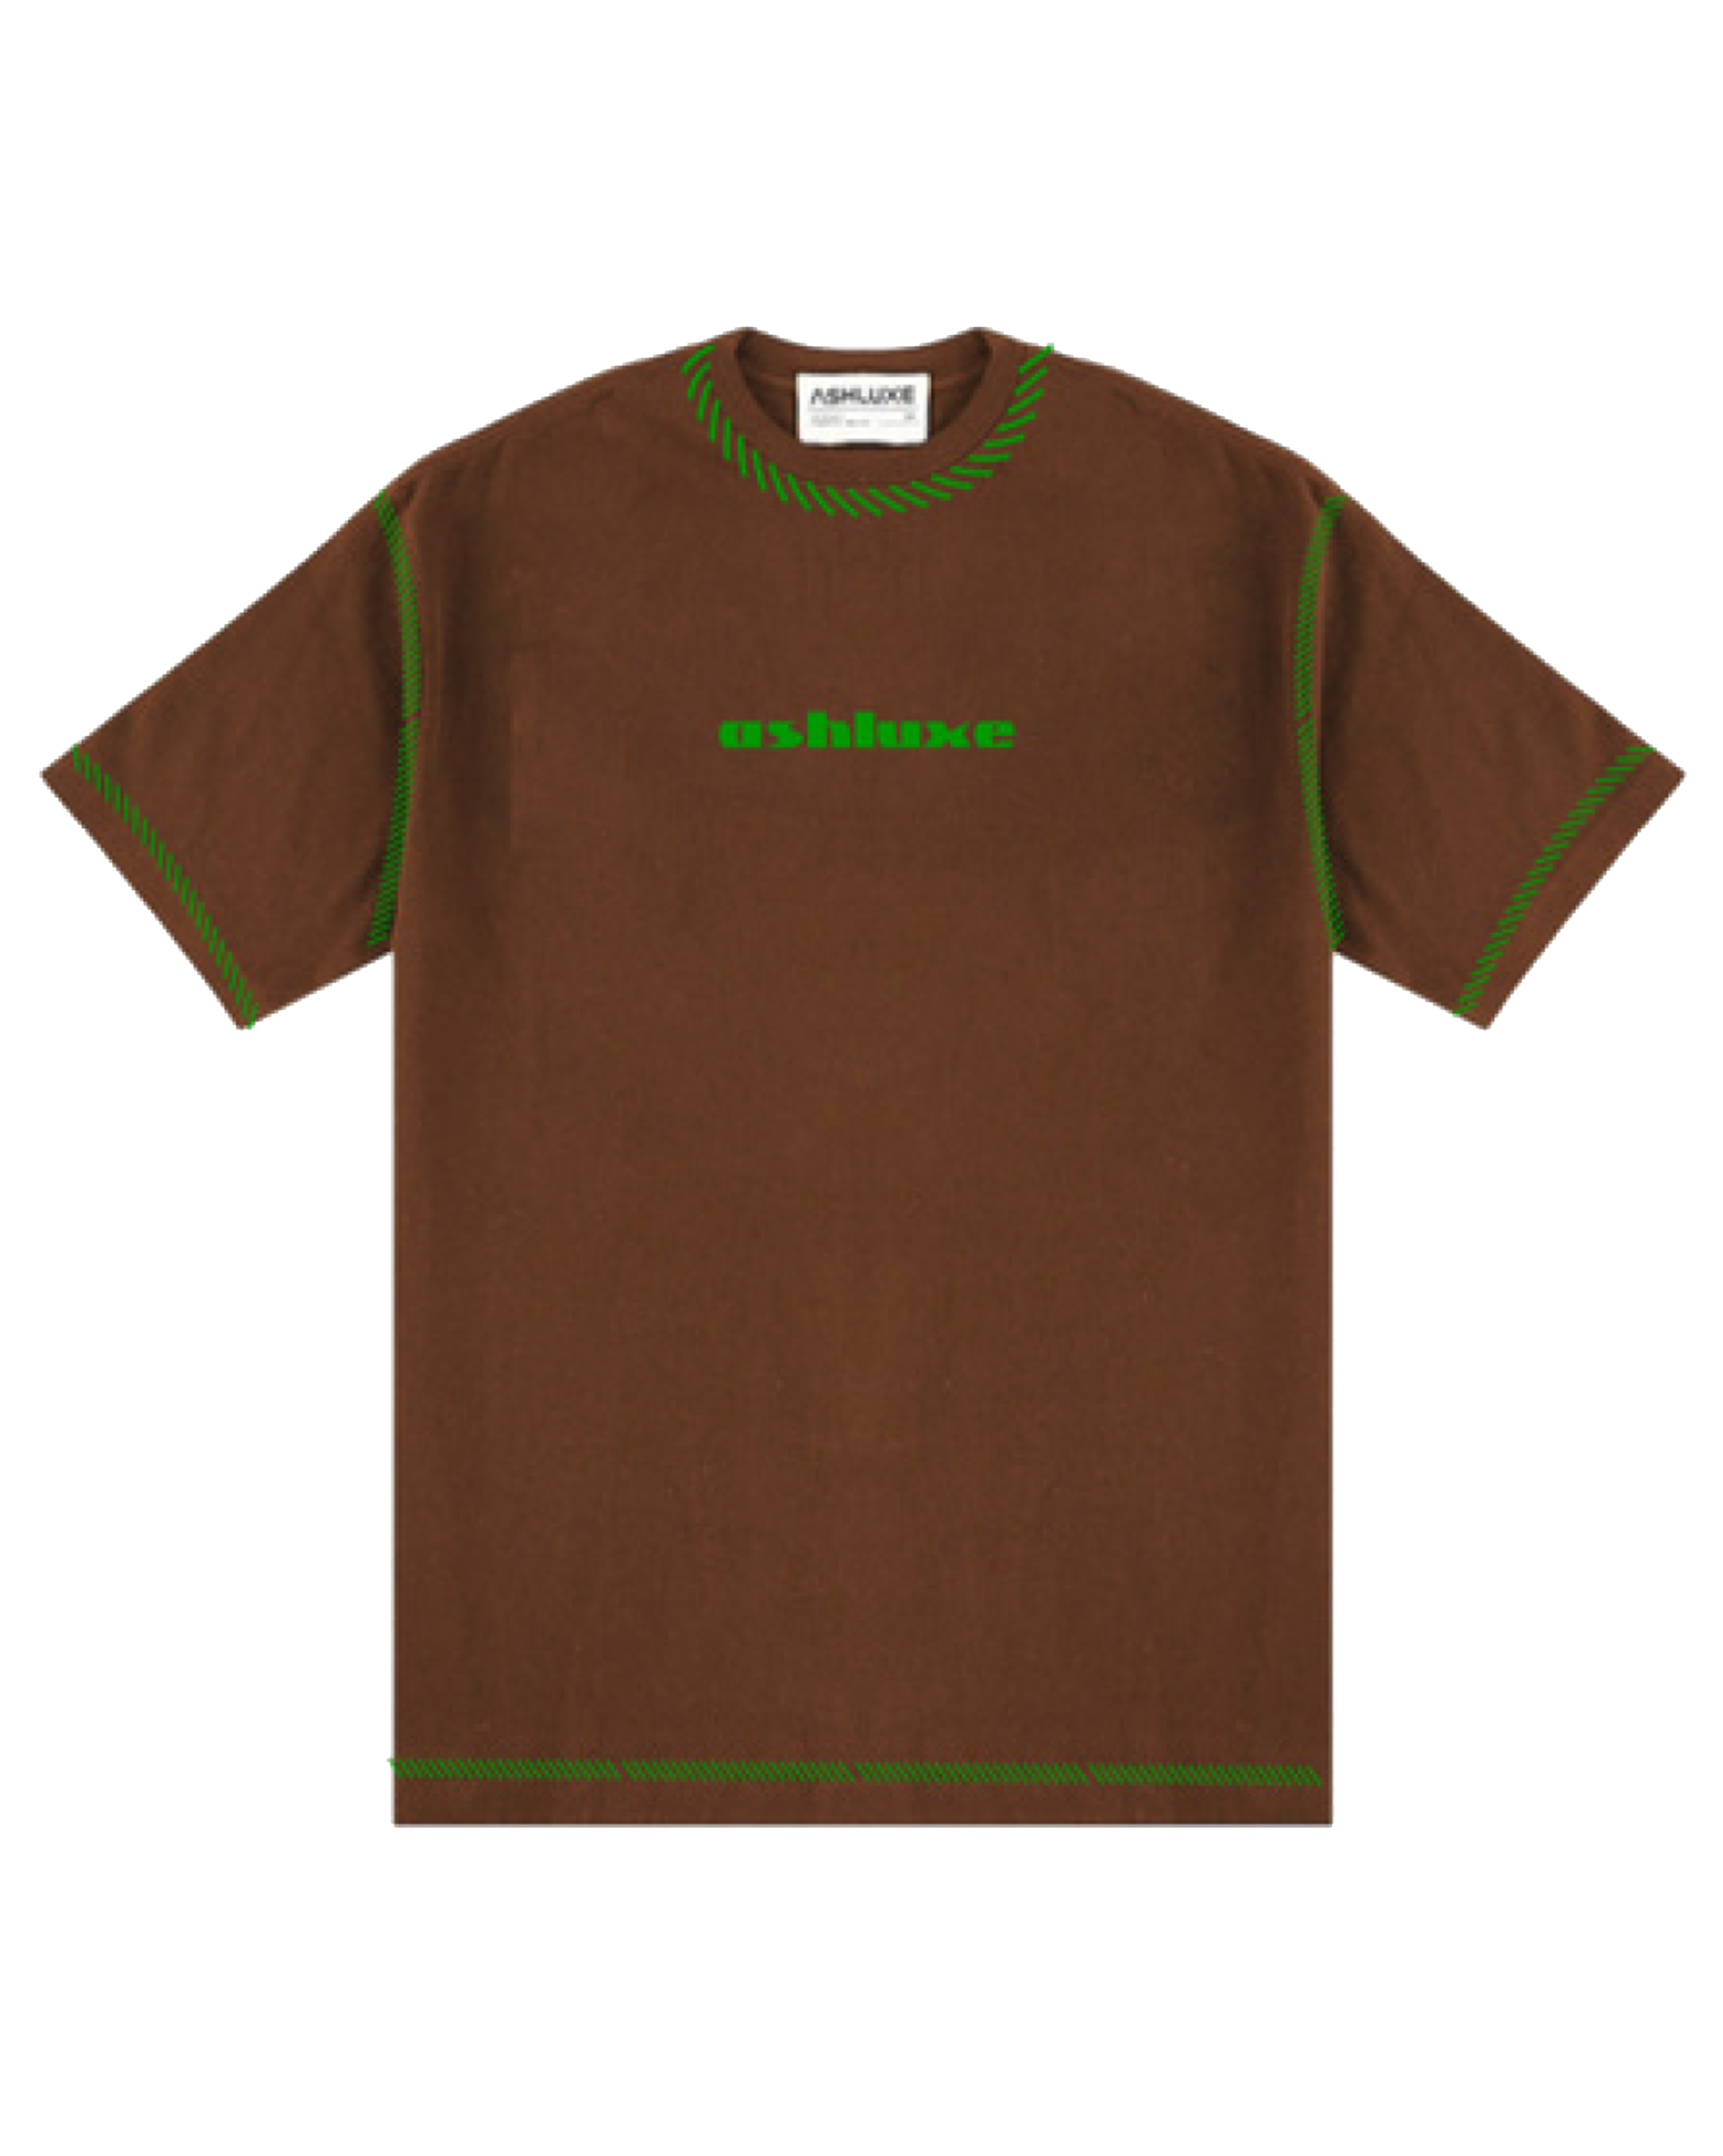 Ashluxe Threaded T-shirt - Brown